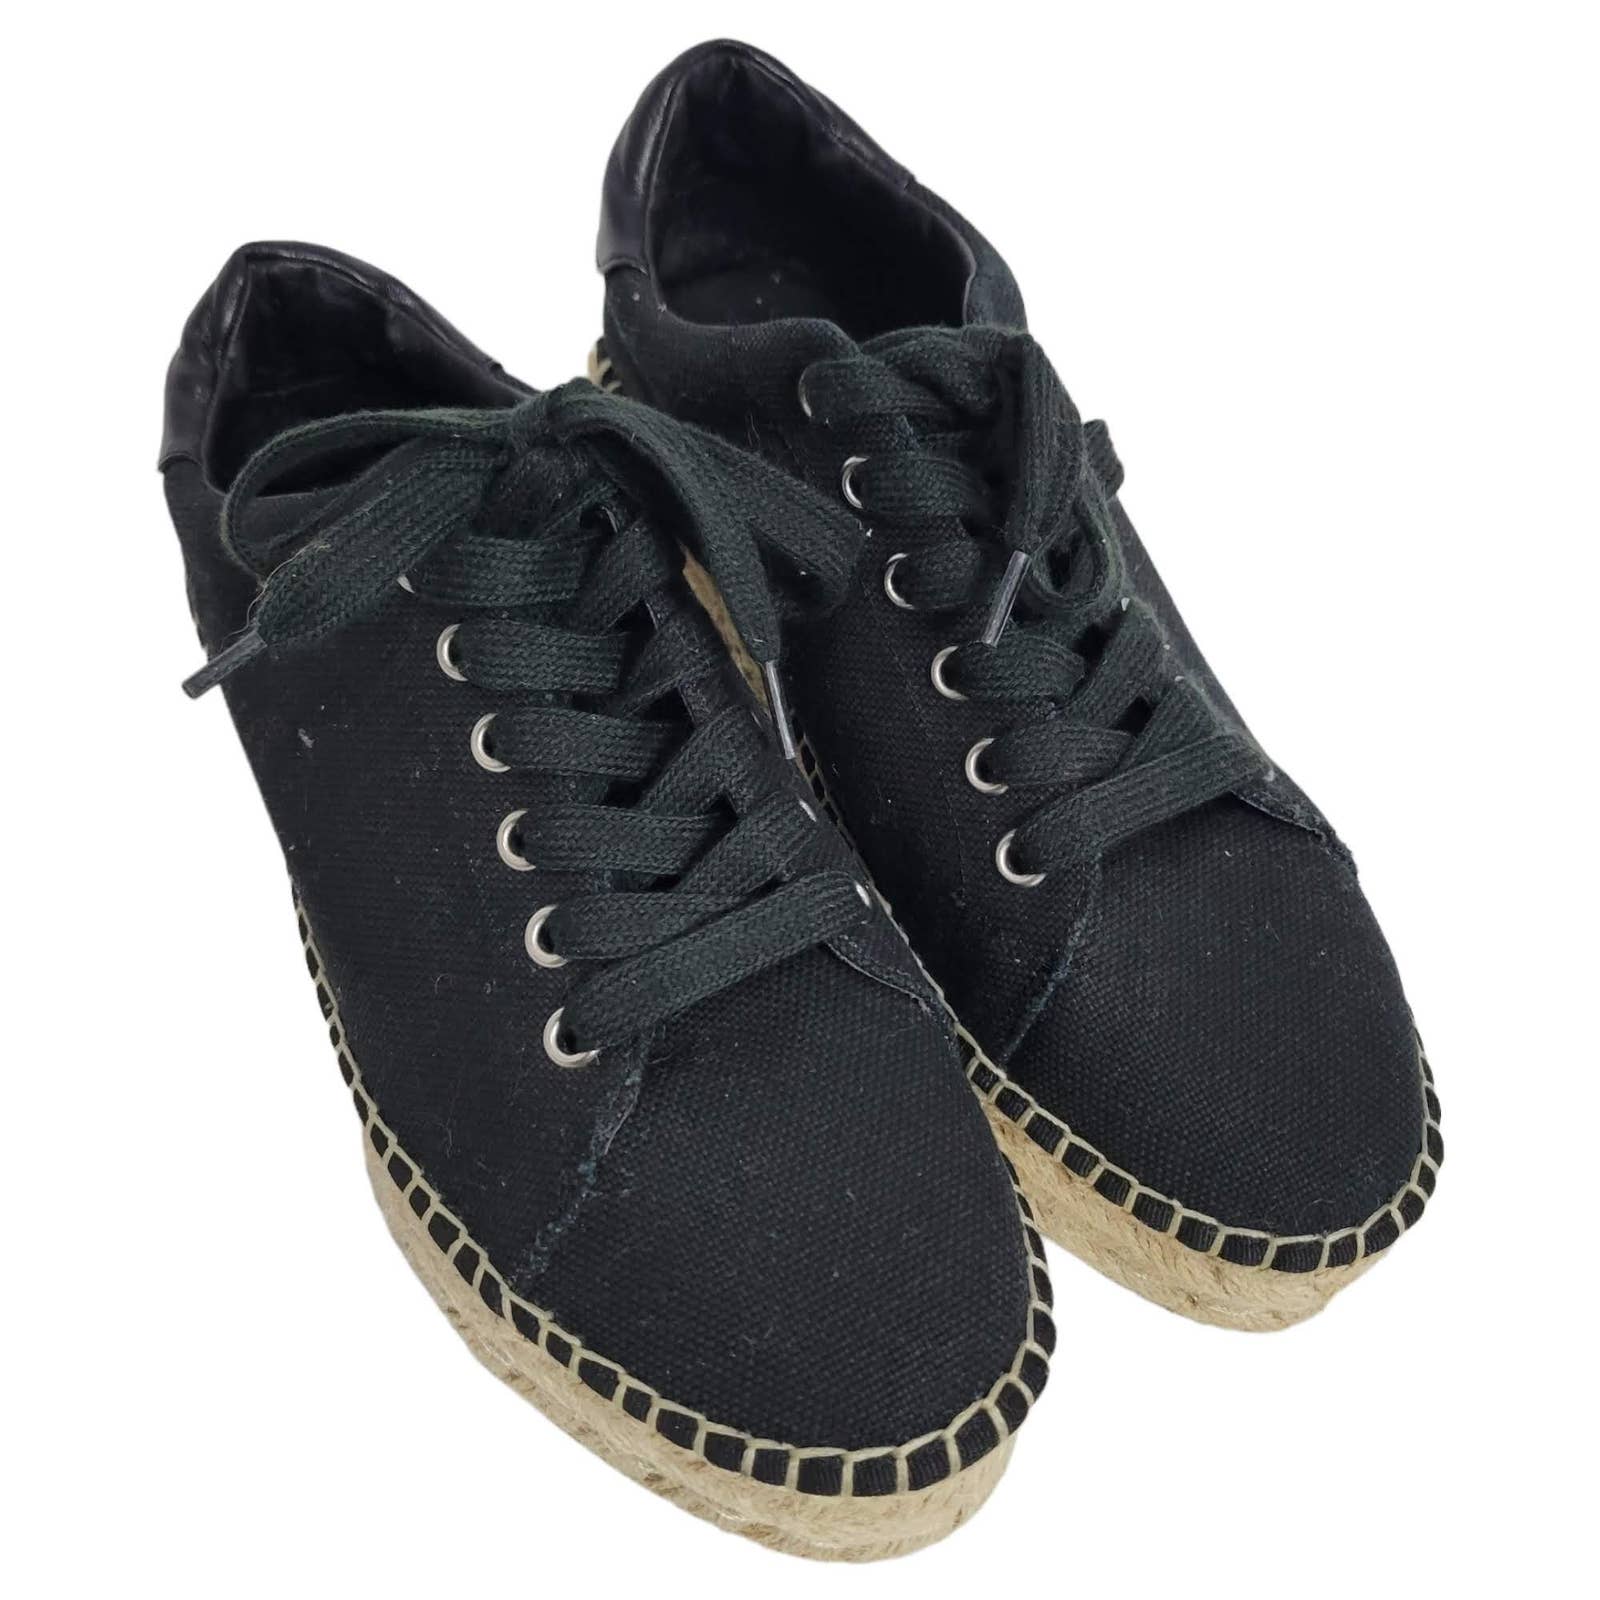 Steve Madden Attitude Espadrille Flatform Shoes Black Canvas Sneakers Size 8.5